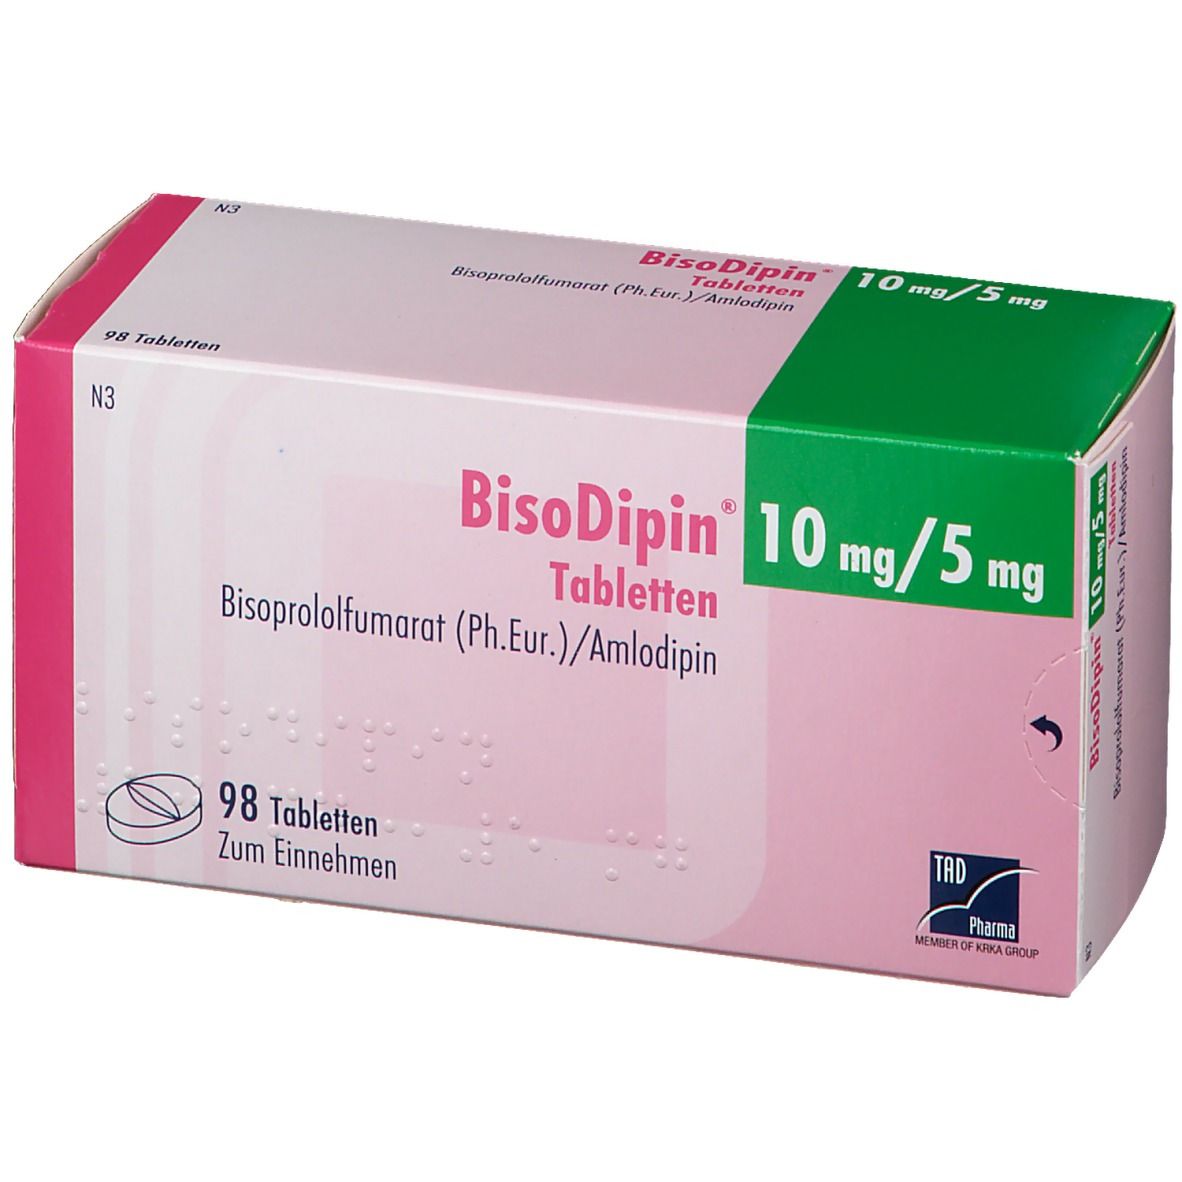 BisoDipin® 10 mg/5 mg